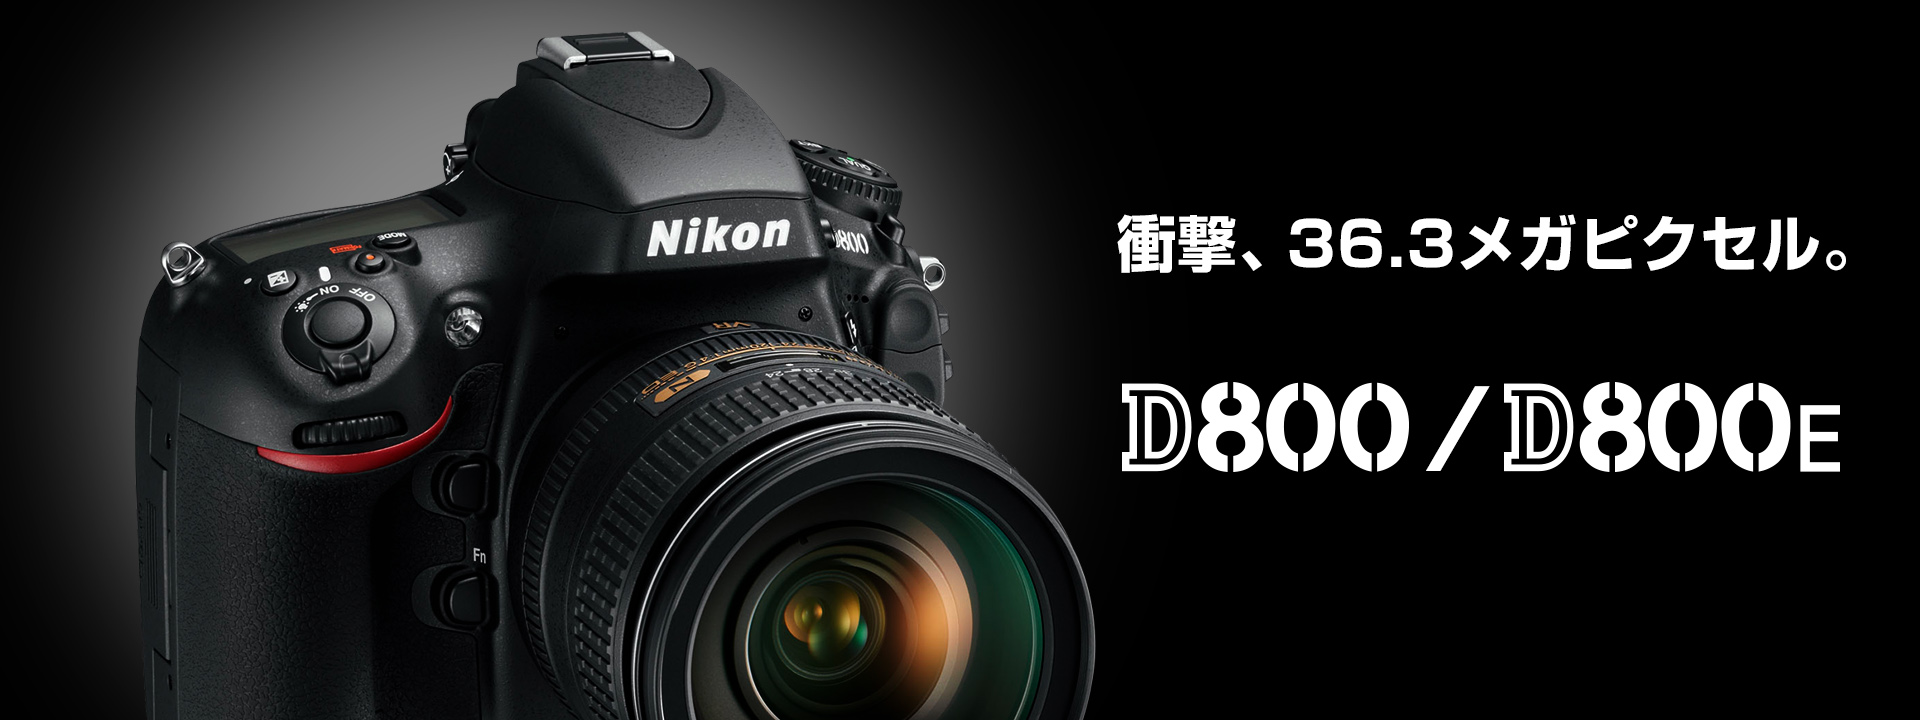 D800/D800E - 概要 | 一眼レフカメラ | ニコンイメージング